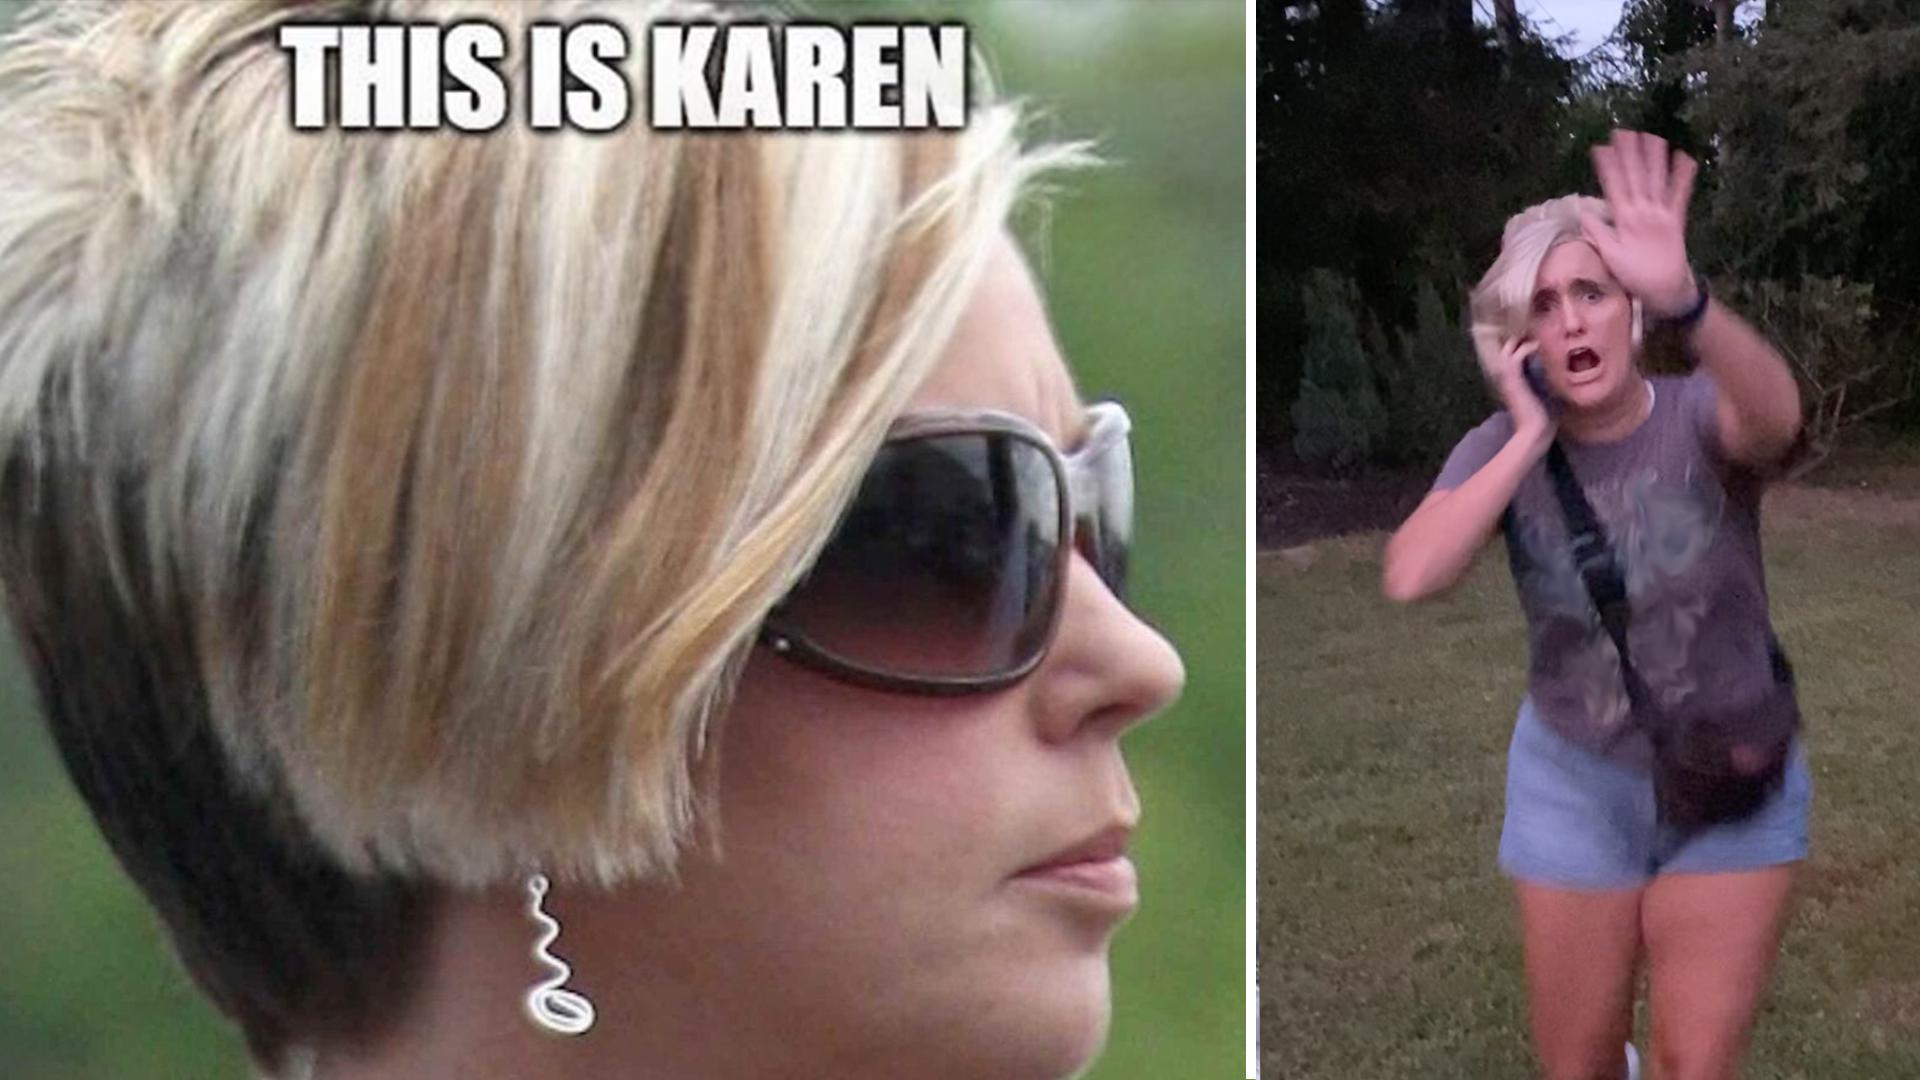 BuzzFeed Video - The Origin of the Karen Meme